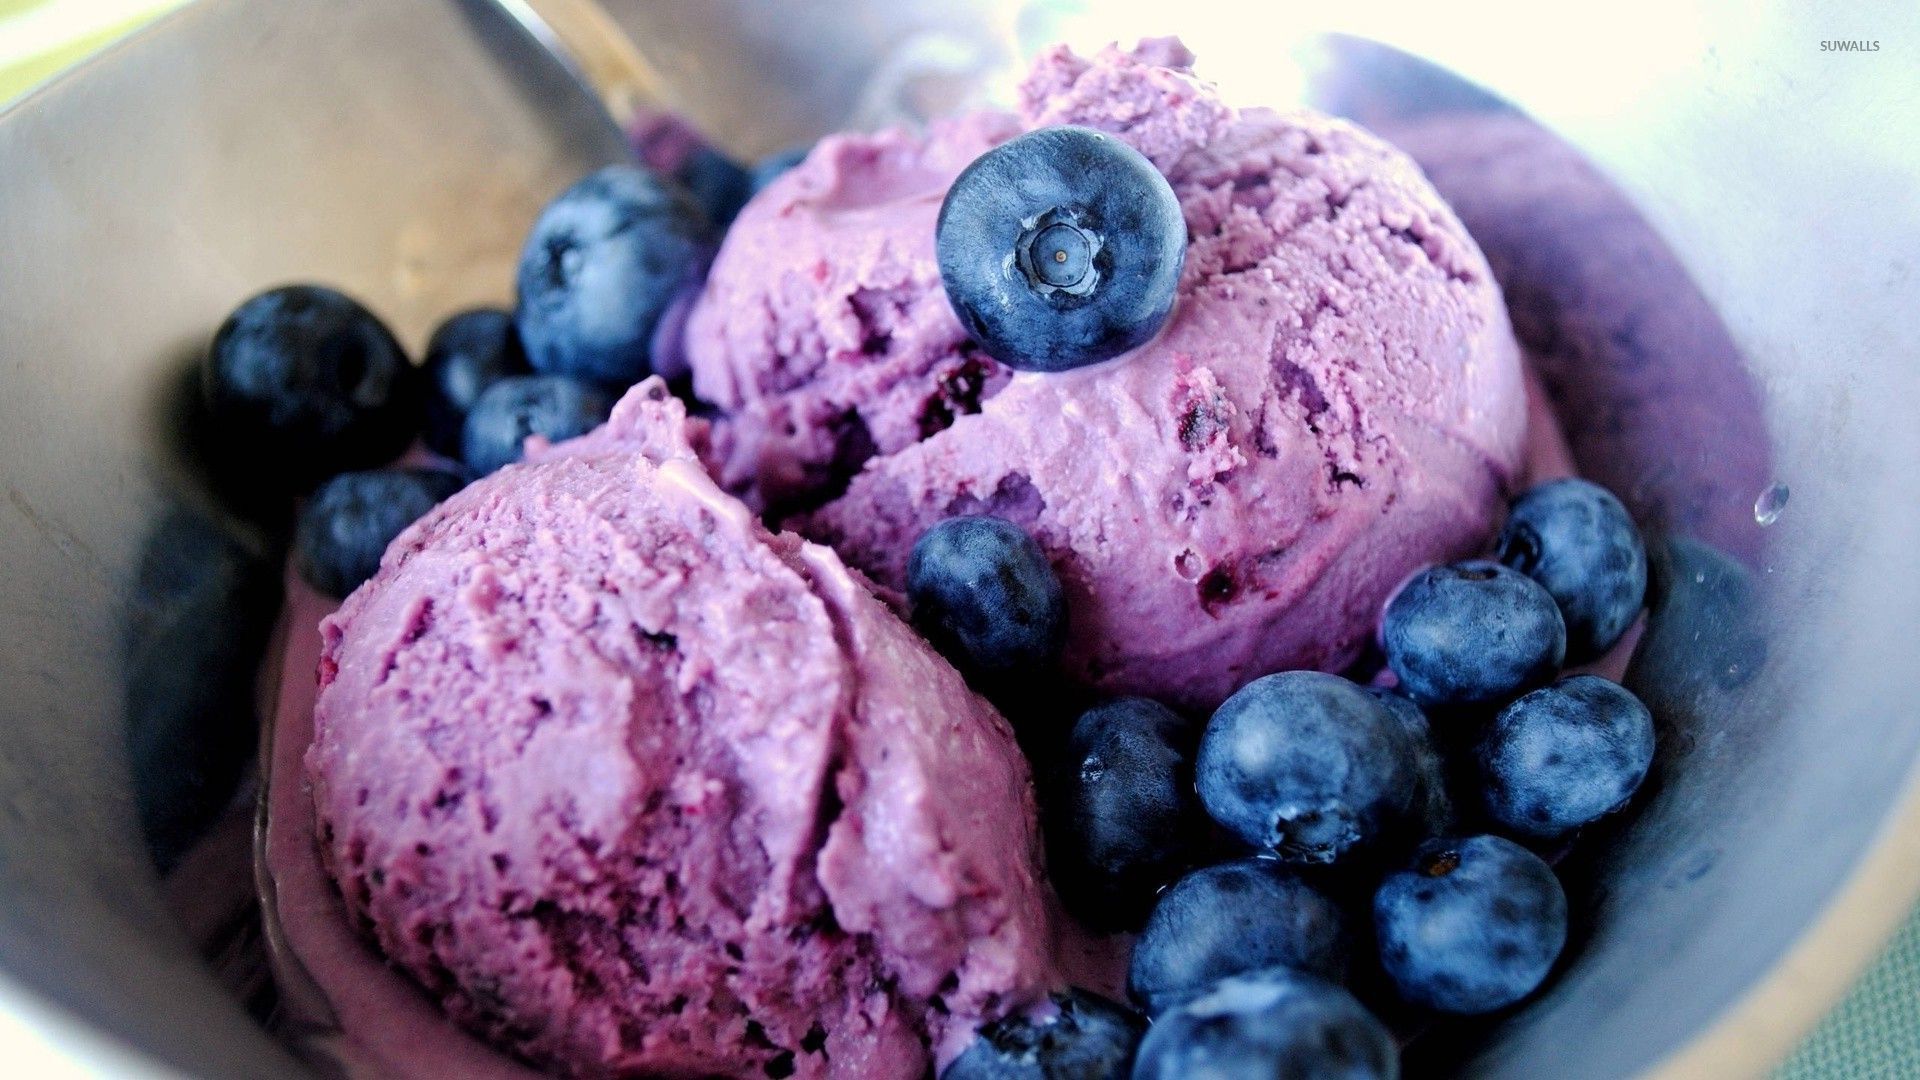 blueberry-ice-cream-31376-1920x1080.jpg